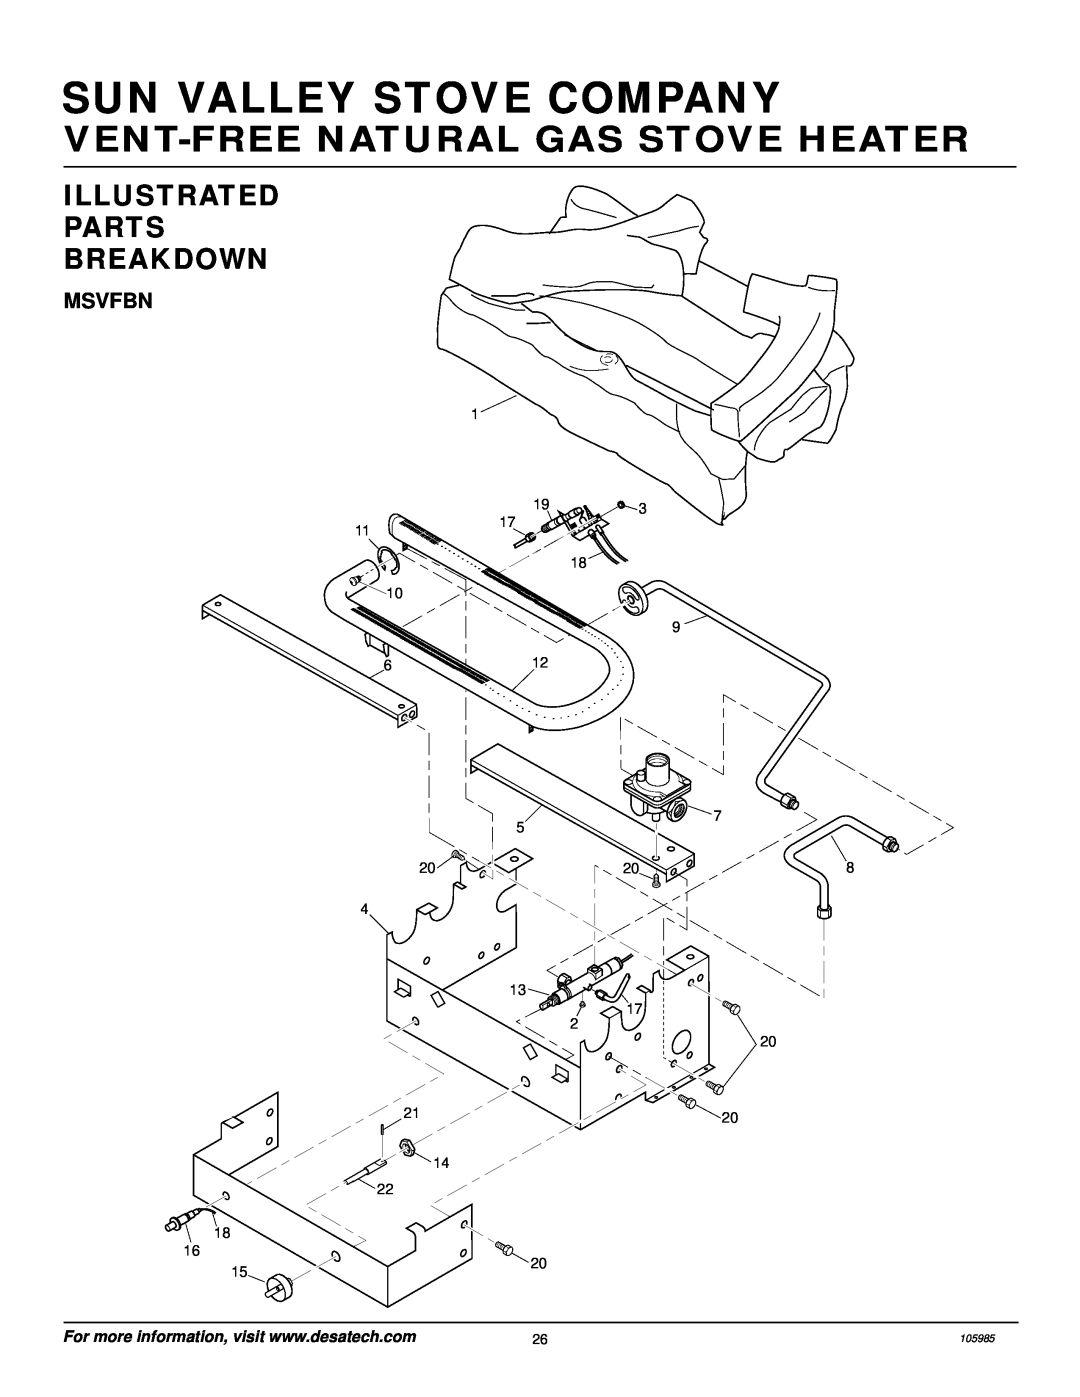 Desa MSVFBNR Series Msvfbn, Sun Valley Stove Company, Vent-Freenatural Gas Stove Heater, Illustrated Parts Breakdown 